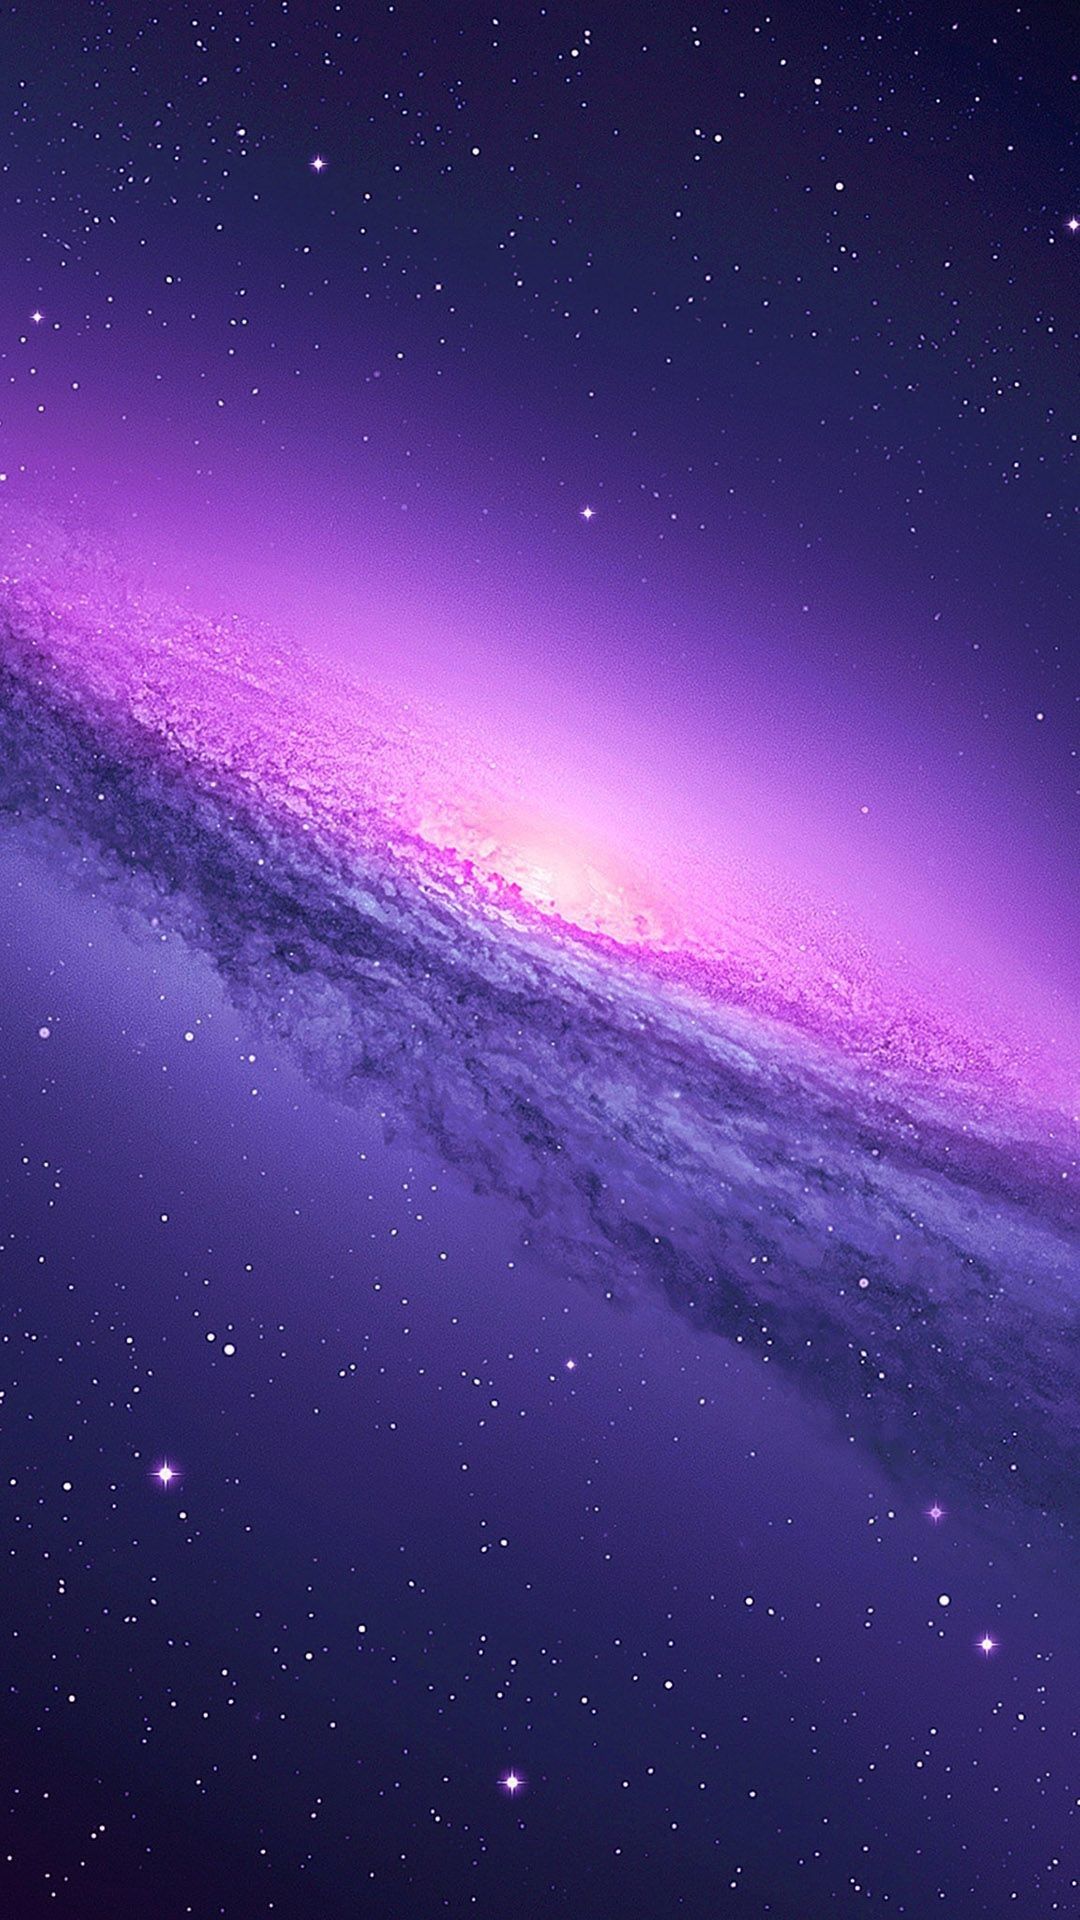 Black and Purple Galaxy Wallpaper